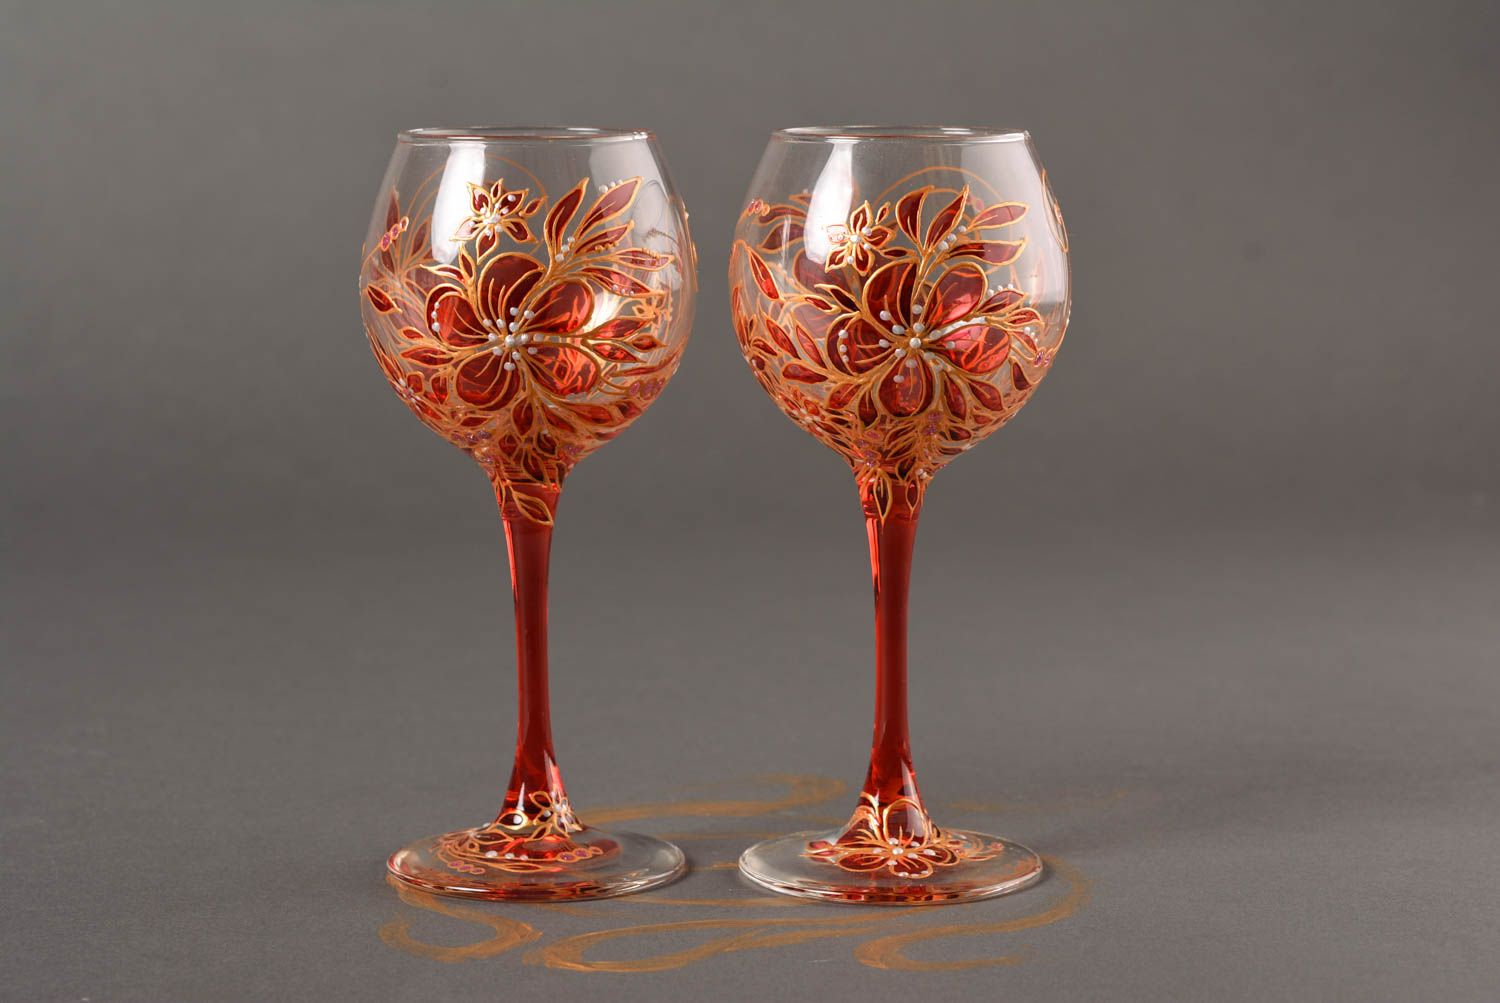 Unusual handmade wine glass 2 pieces glass ware stemware ideas handmade gifts photo 1